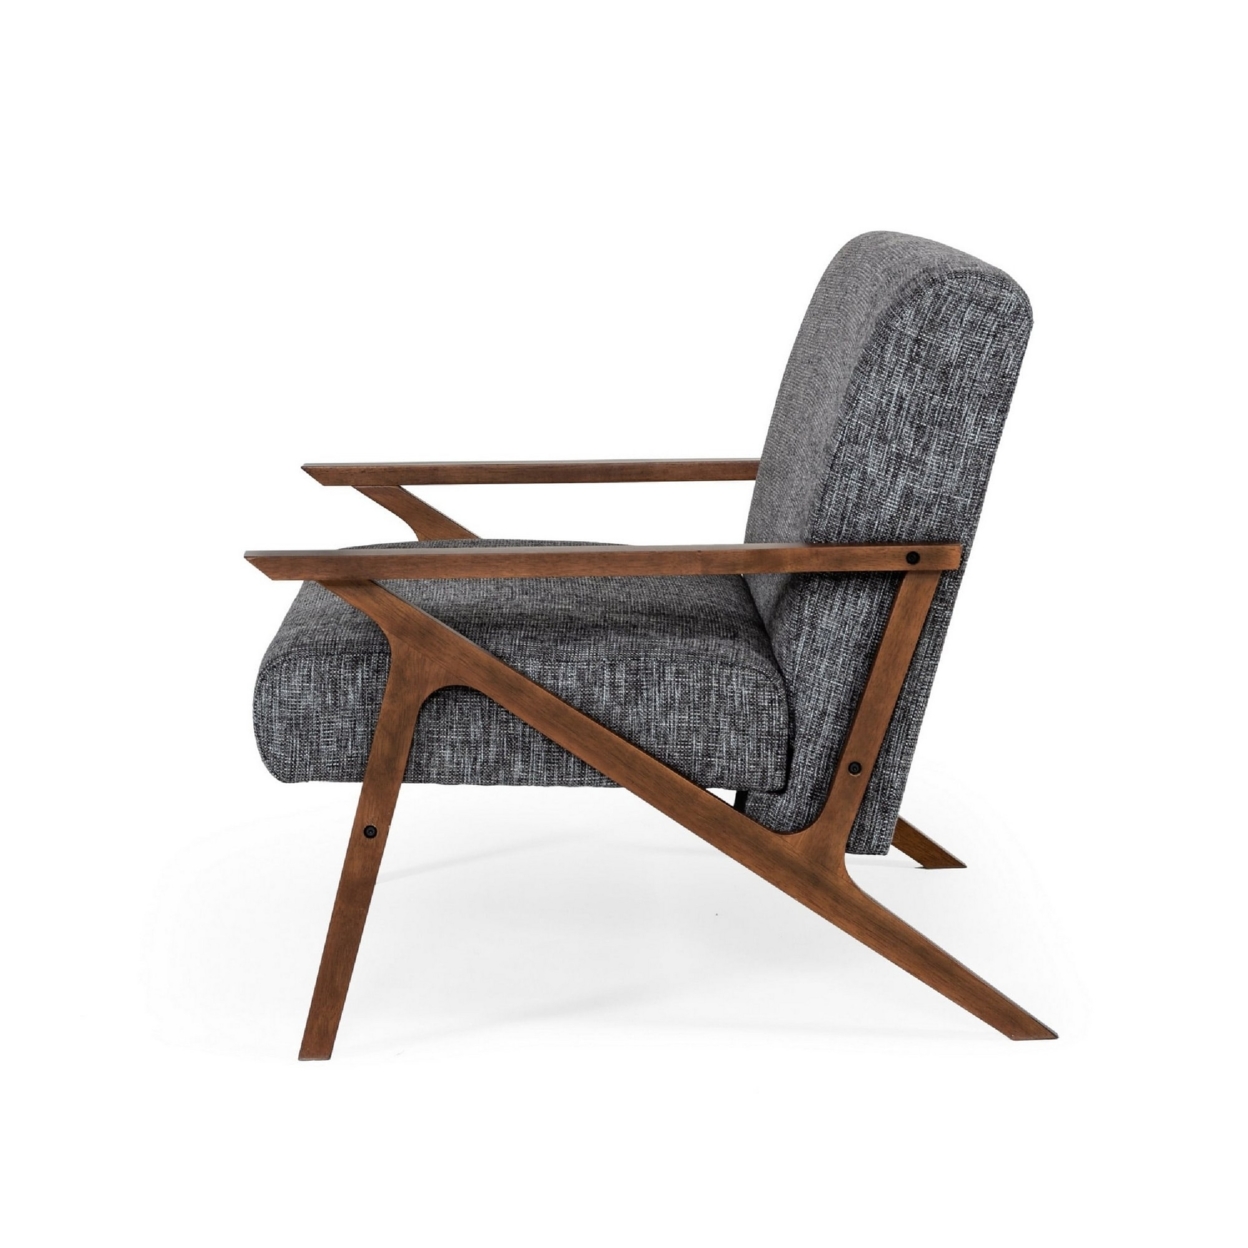 Cid 24 Inch Modern Accent Chair, Solid Wood, Fabric, Heather Gray- Saltoro Sherpi